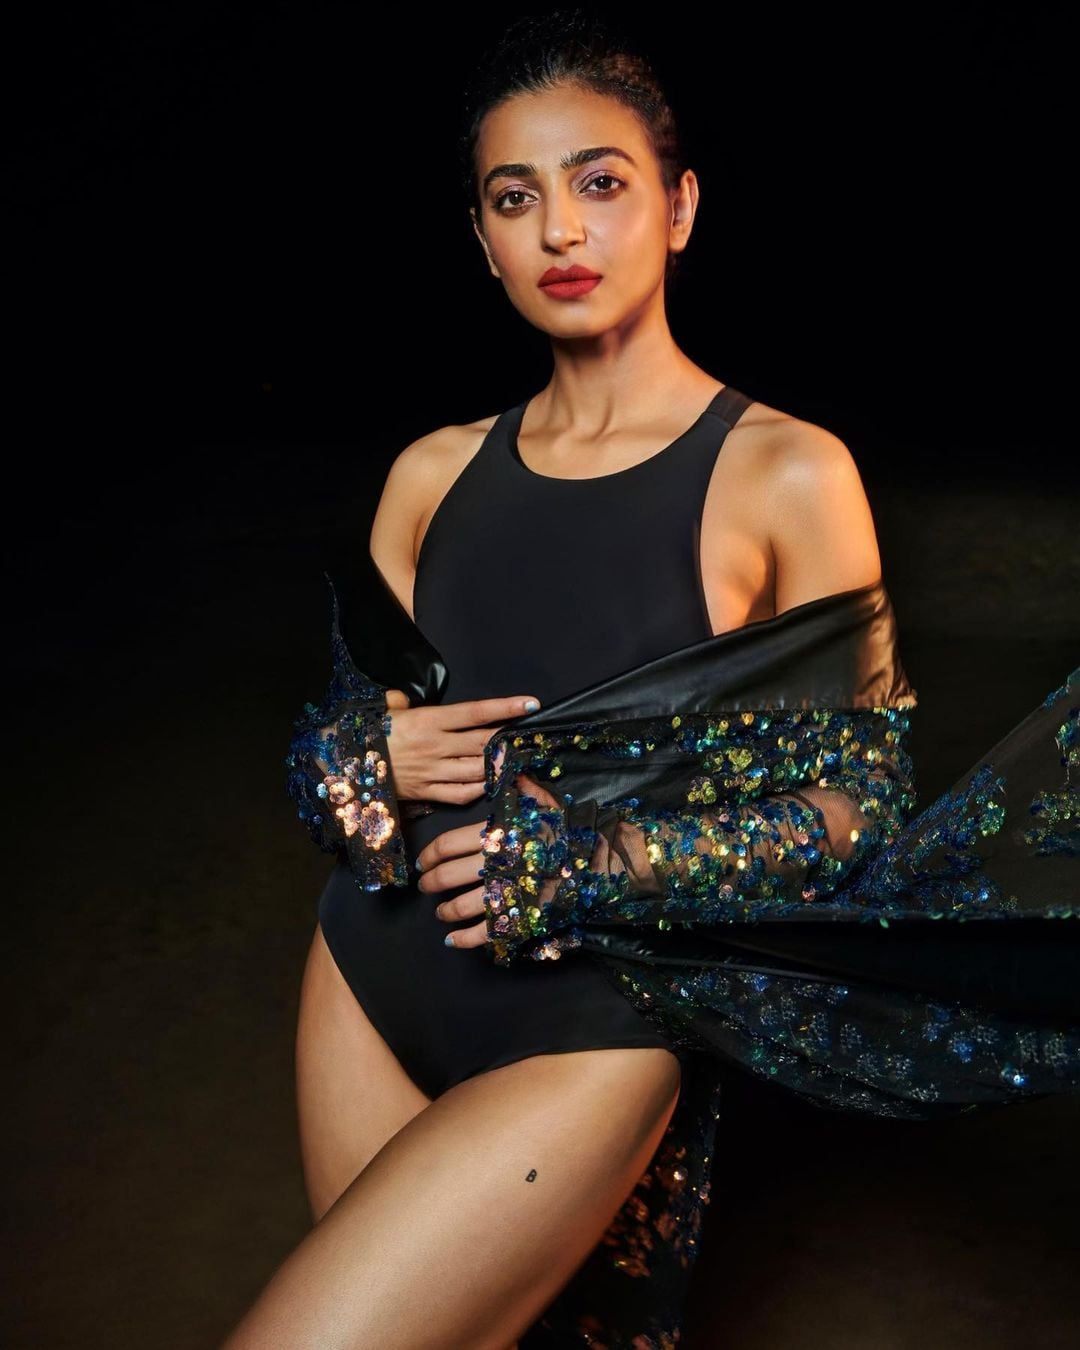 Radhika Apte flaunts her petite frame in a black bodysuit and shimmery shrug.